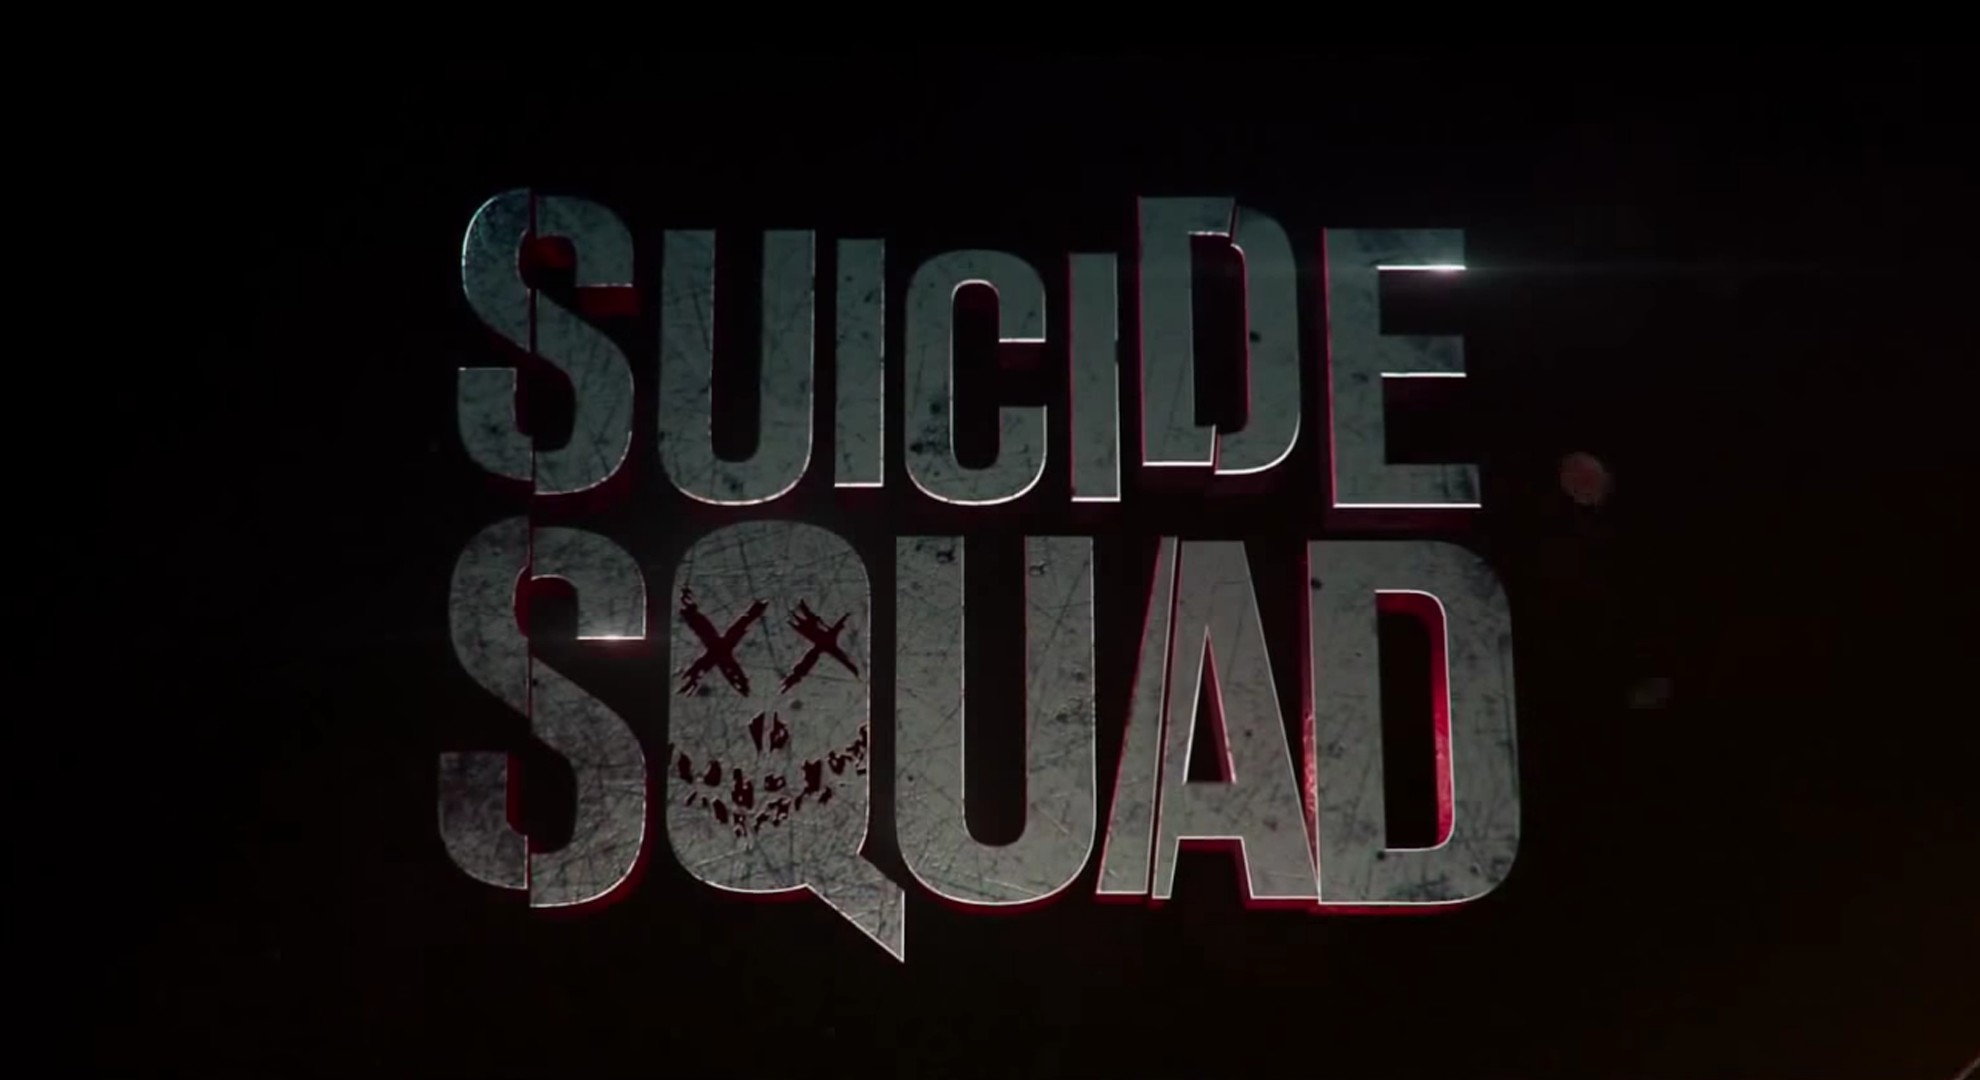 1980x1080 Title : suicide squad wallpaper logo | wallpaperzone.co. Dimension : 1980 x  1080. File Type : JPG/JPEG